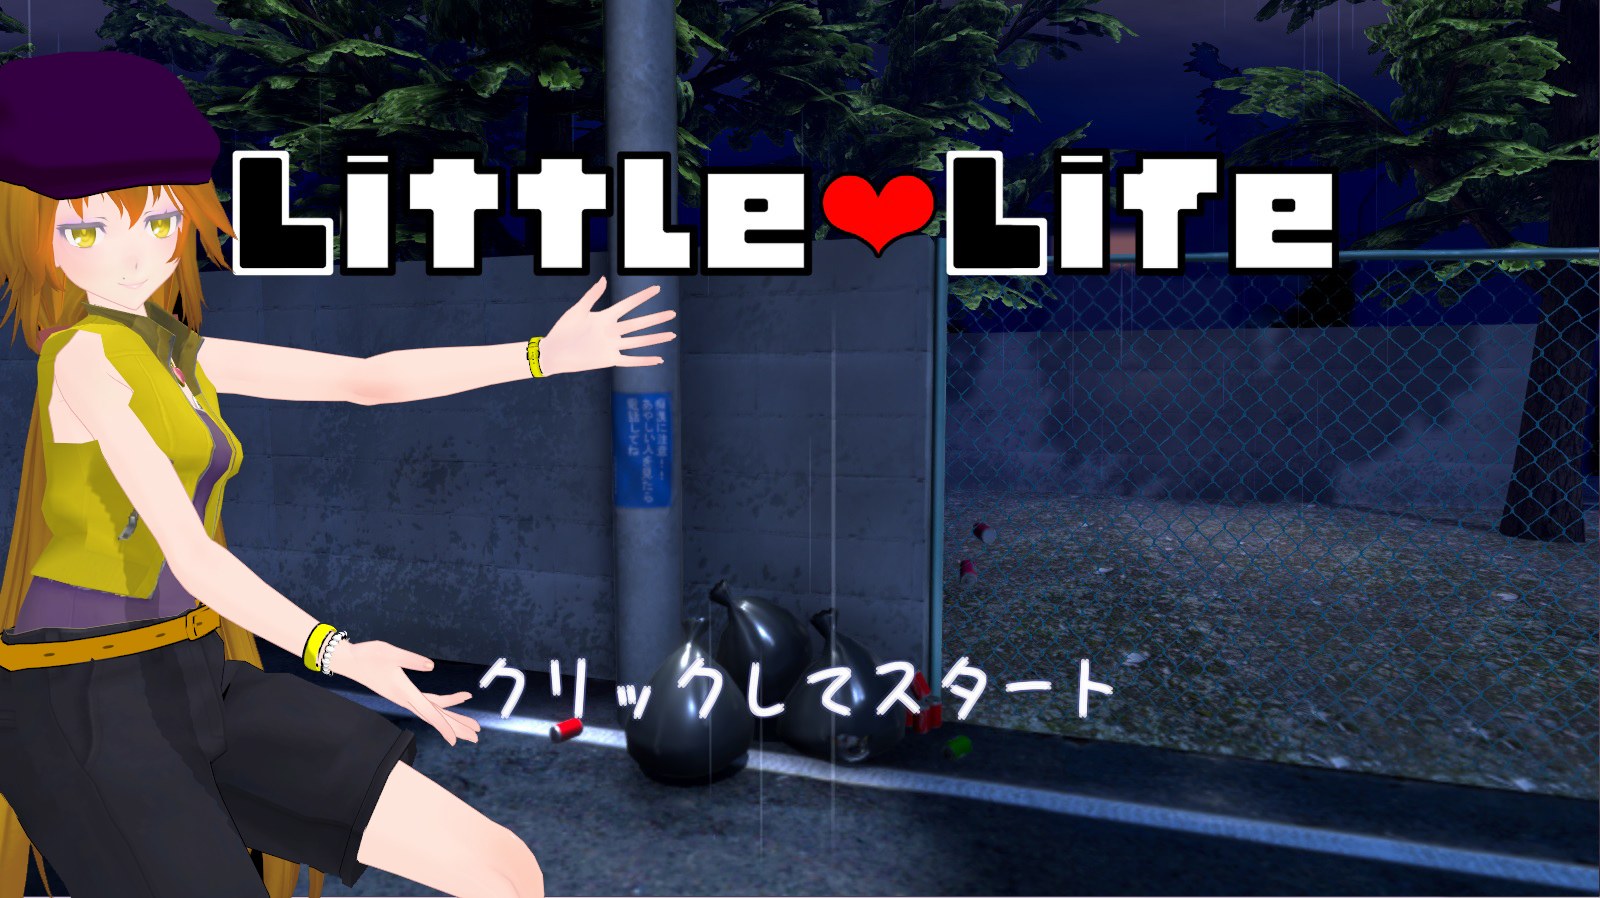 Life 18 игры. Little Life / ver: 1.00. Little Life_v1.0. Lost Life игра. Lost Life геймплей.